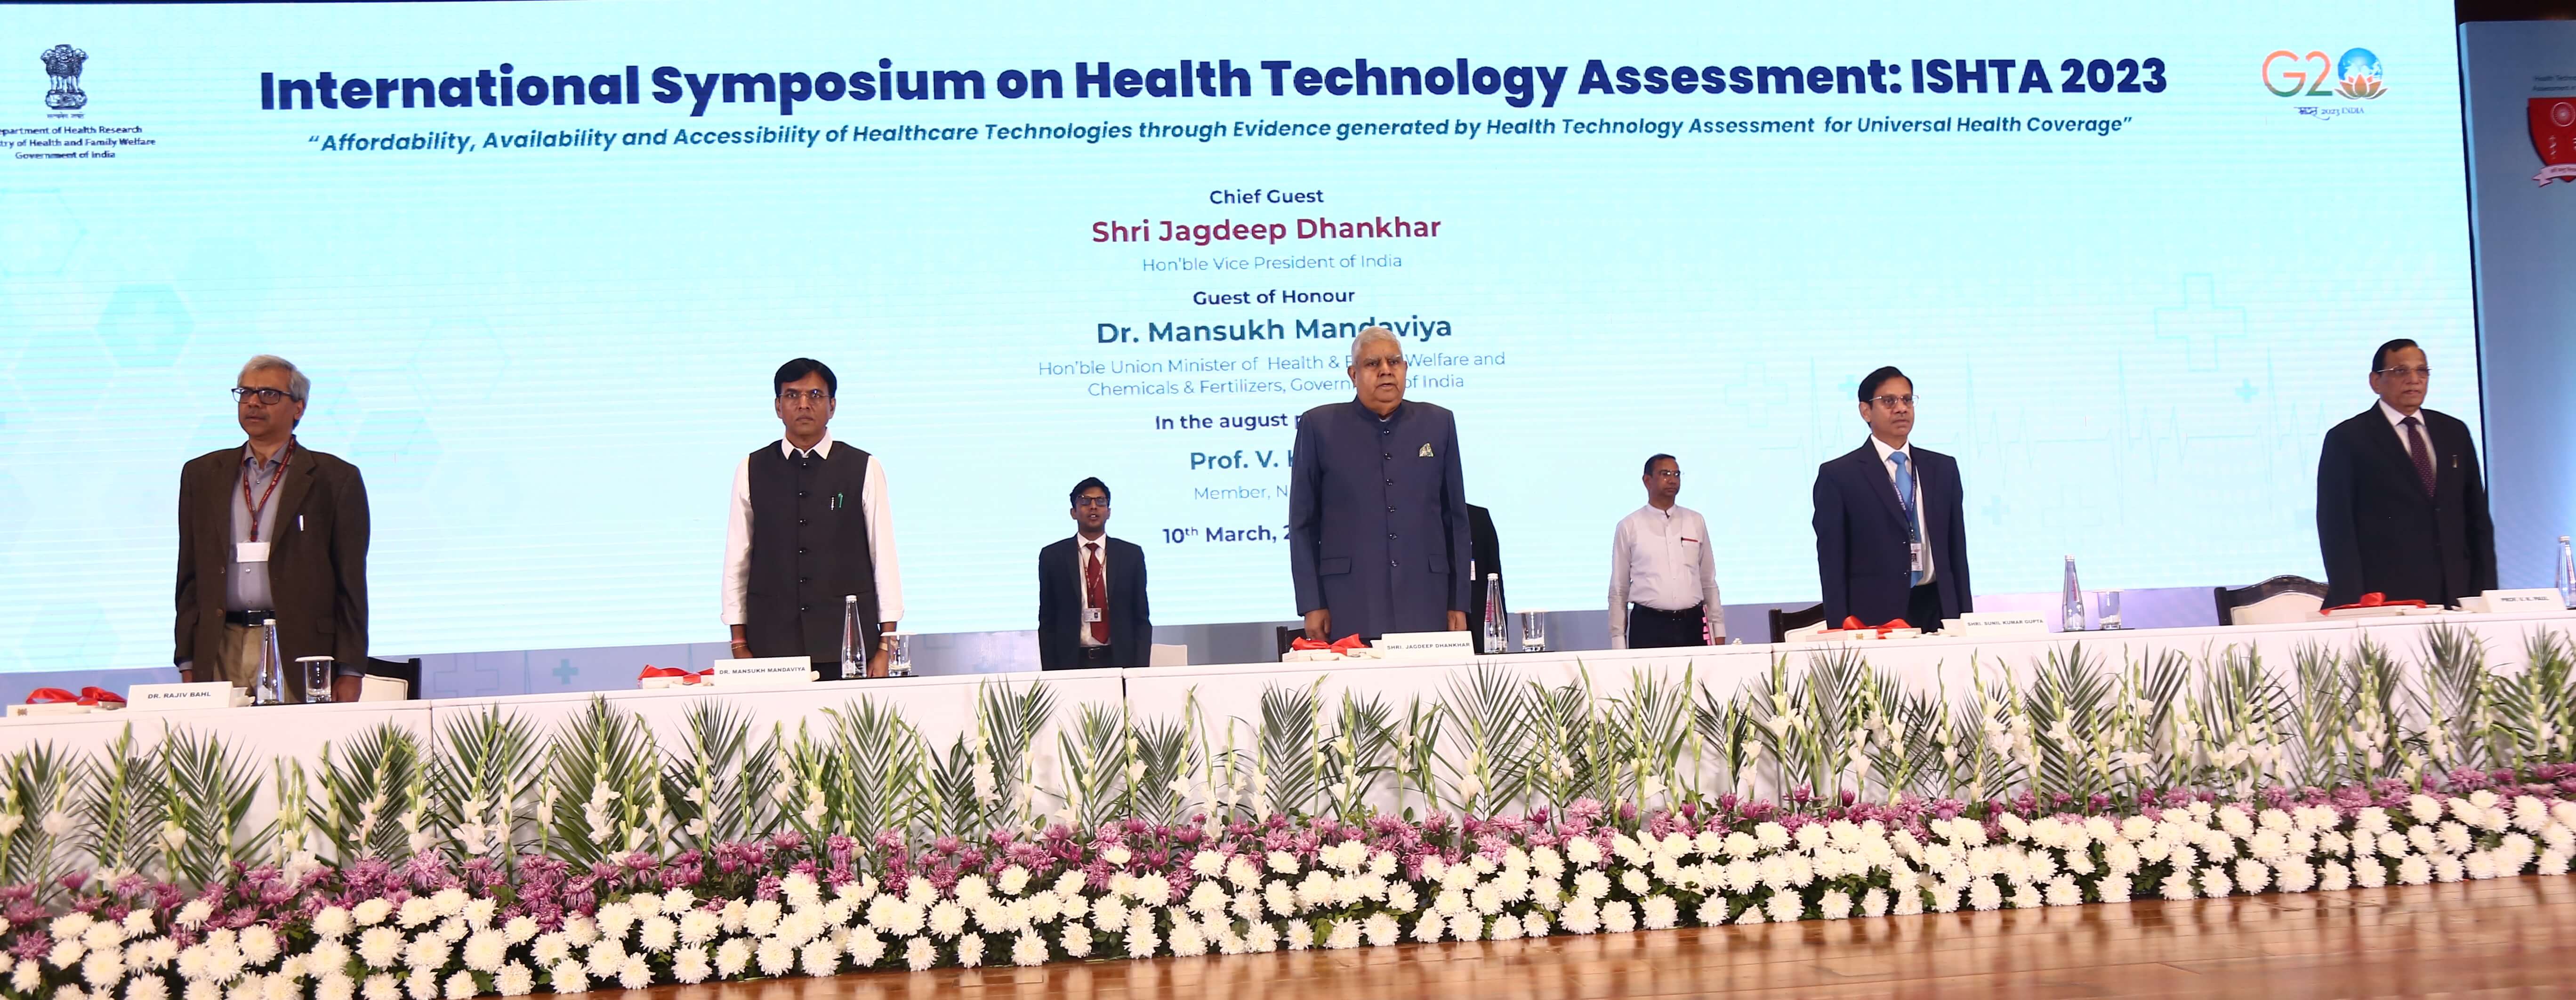 International Symposium on Health Technology Assessment: ISHTA 2023